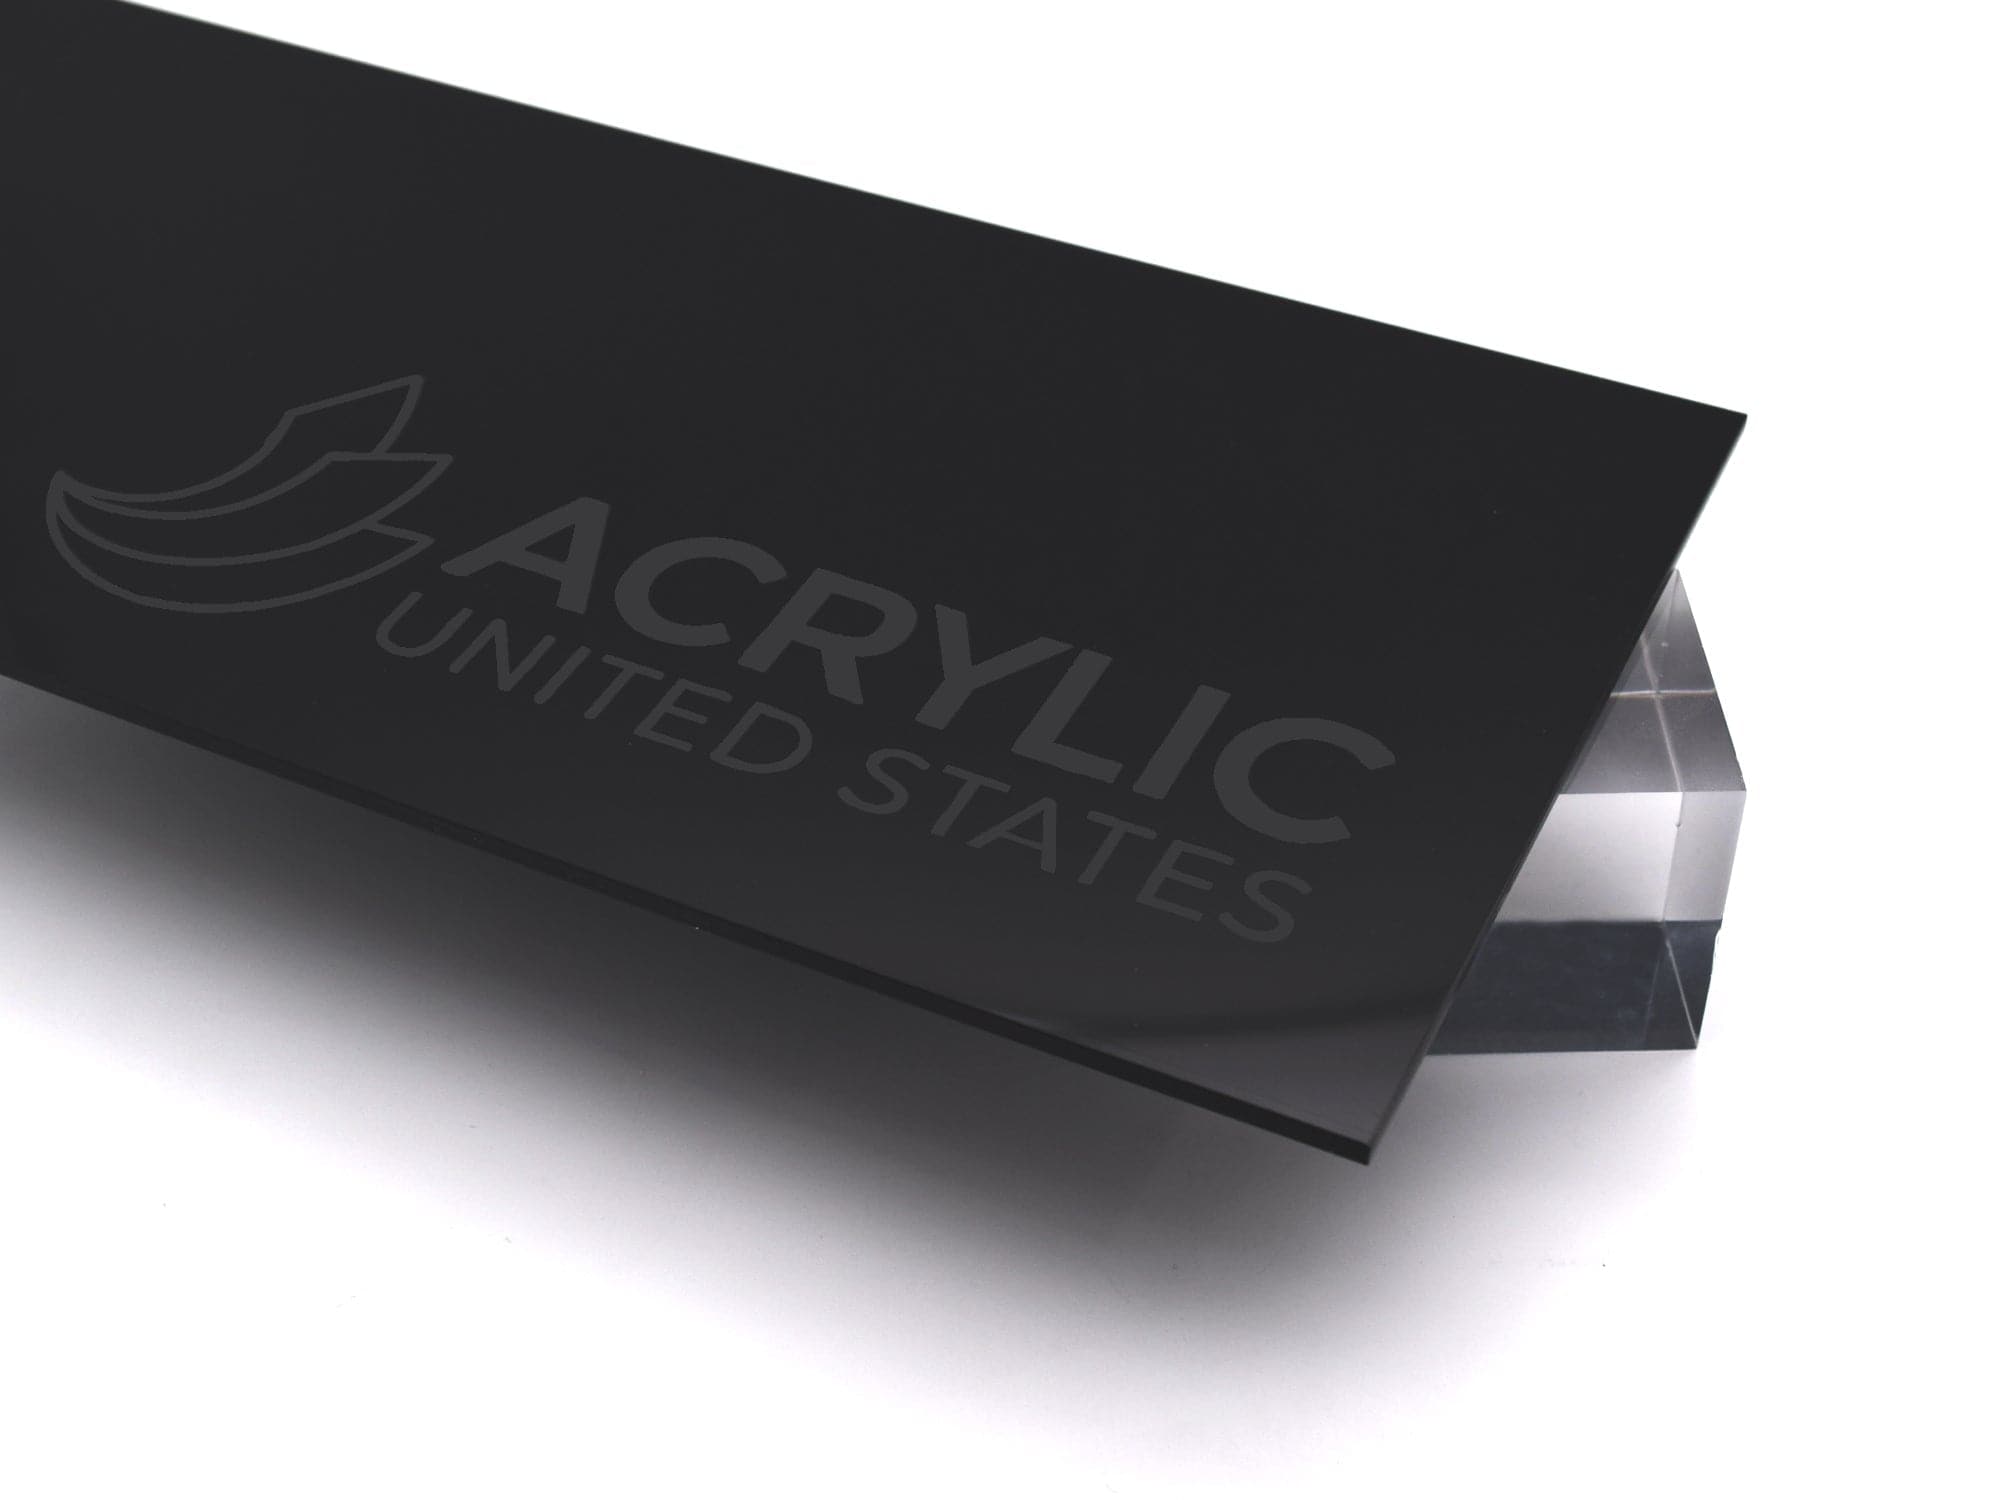 Shop Black Acrylic Sheets at Acrylic United States